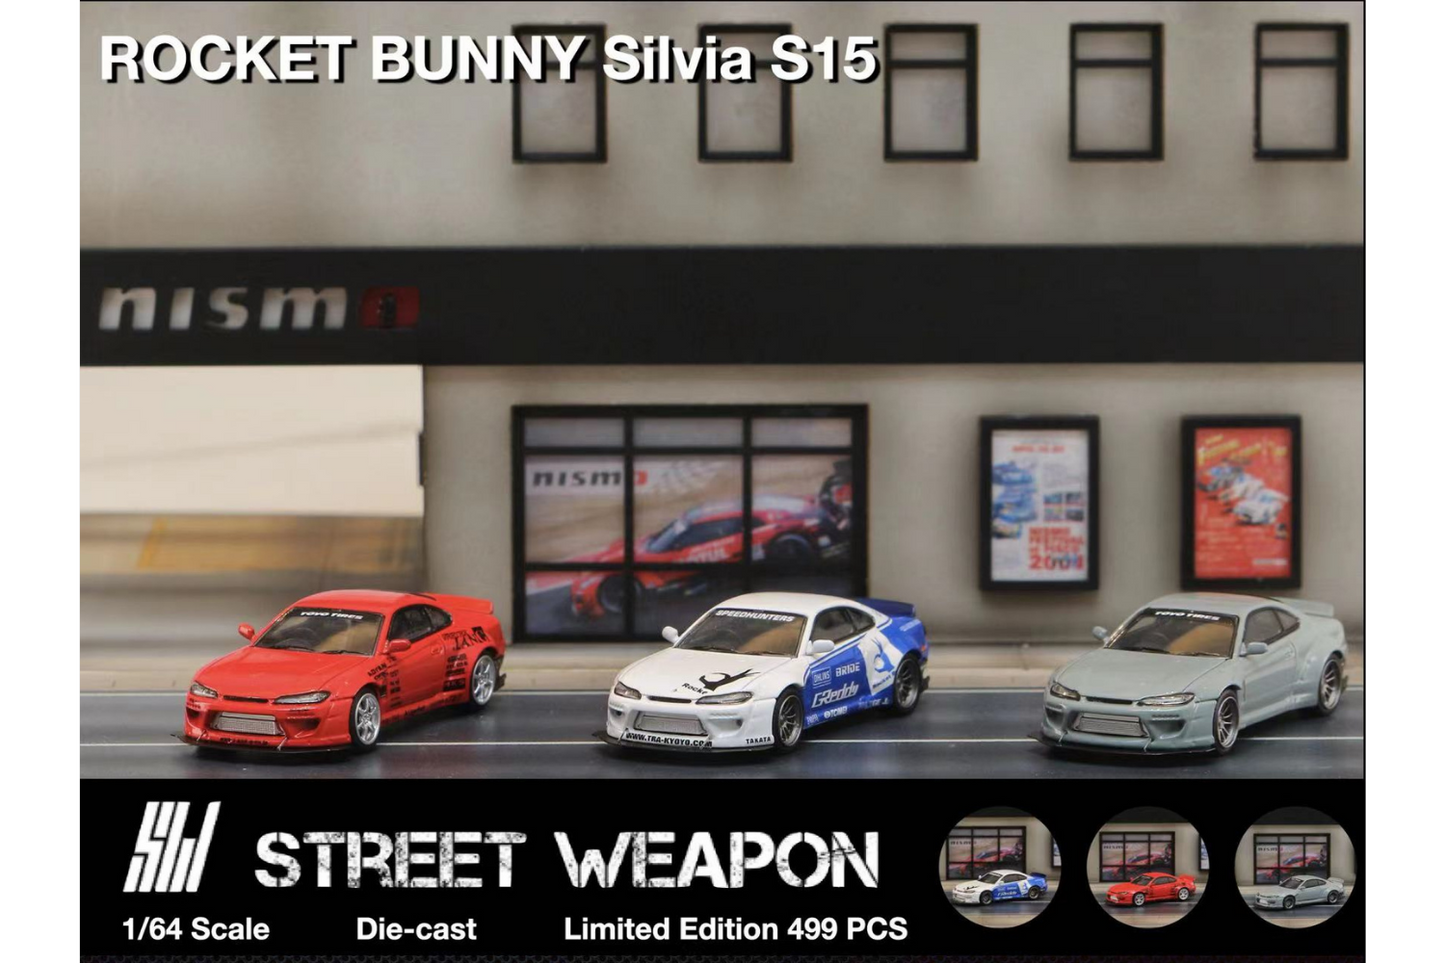 Street Weapon 1/64 Rocket Bunny Nissan Silvia S15